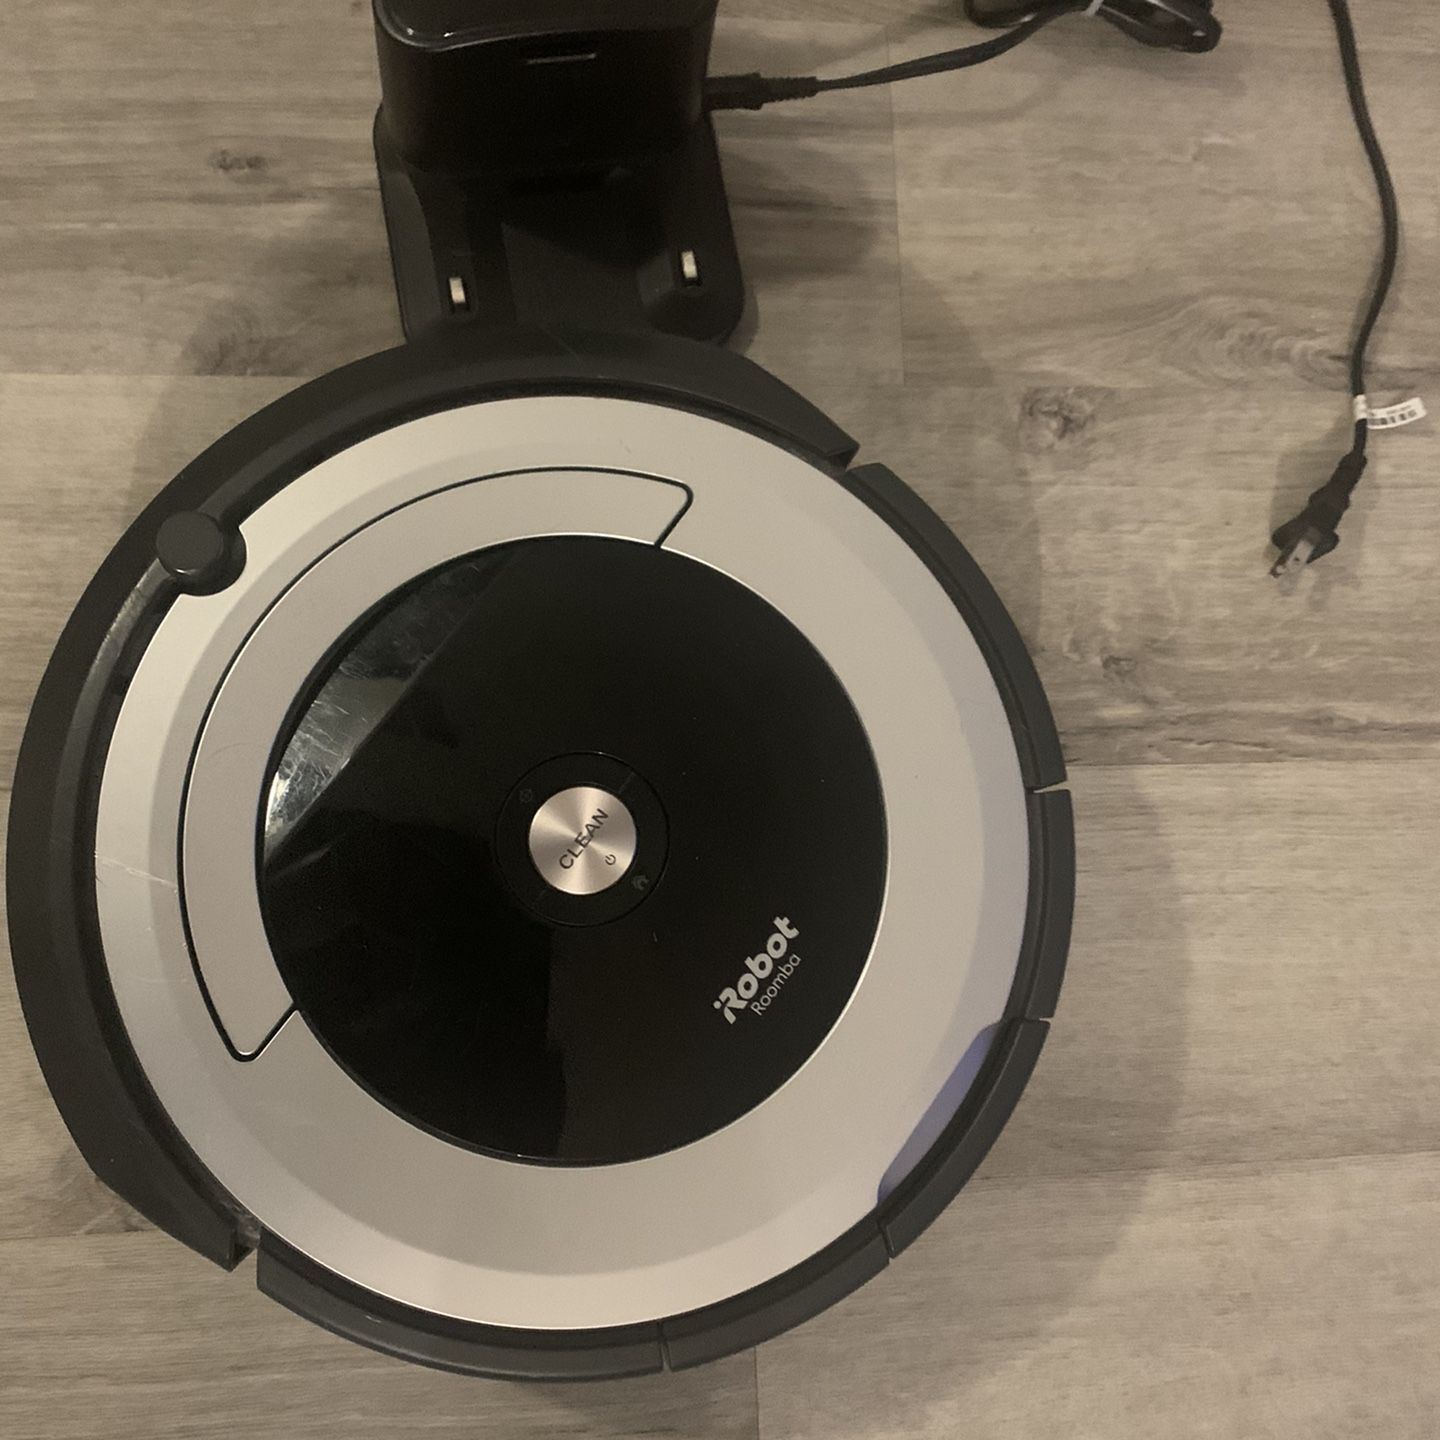 iRobot Roomba 670